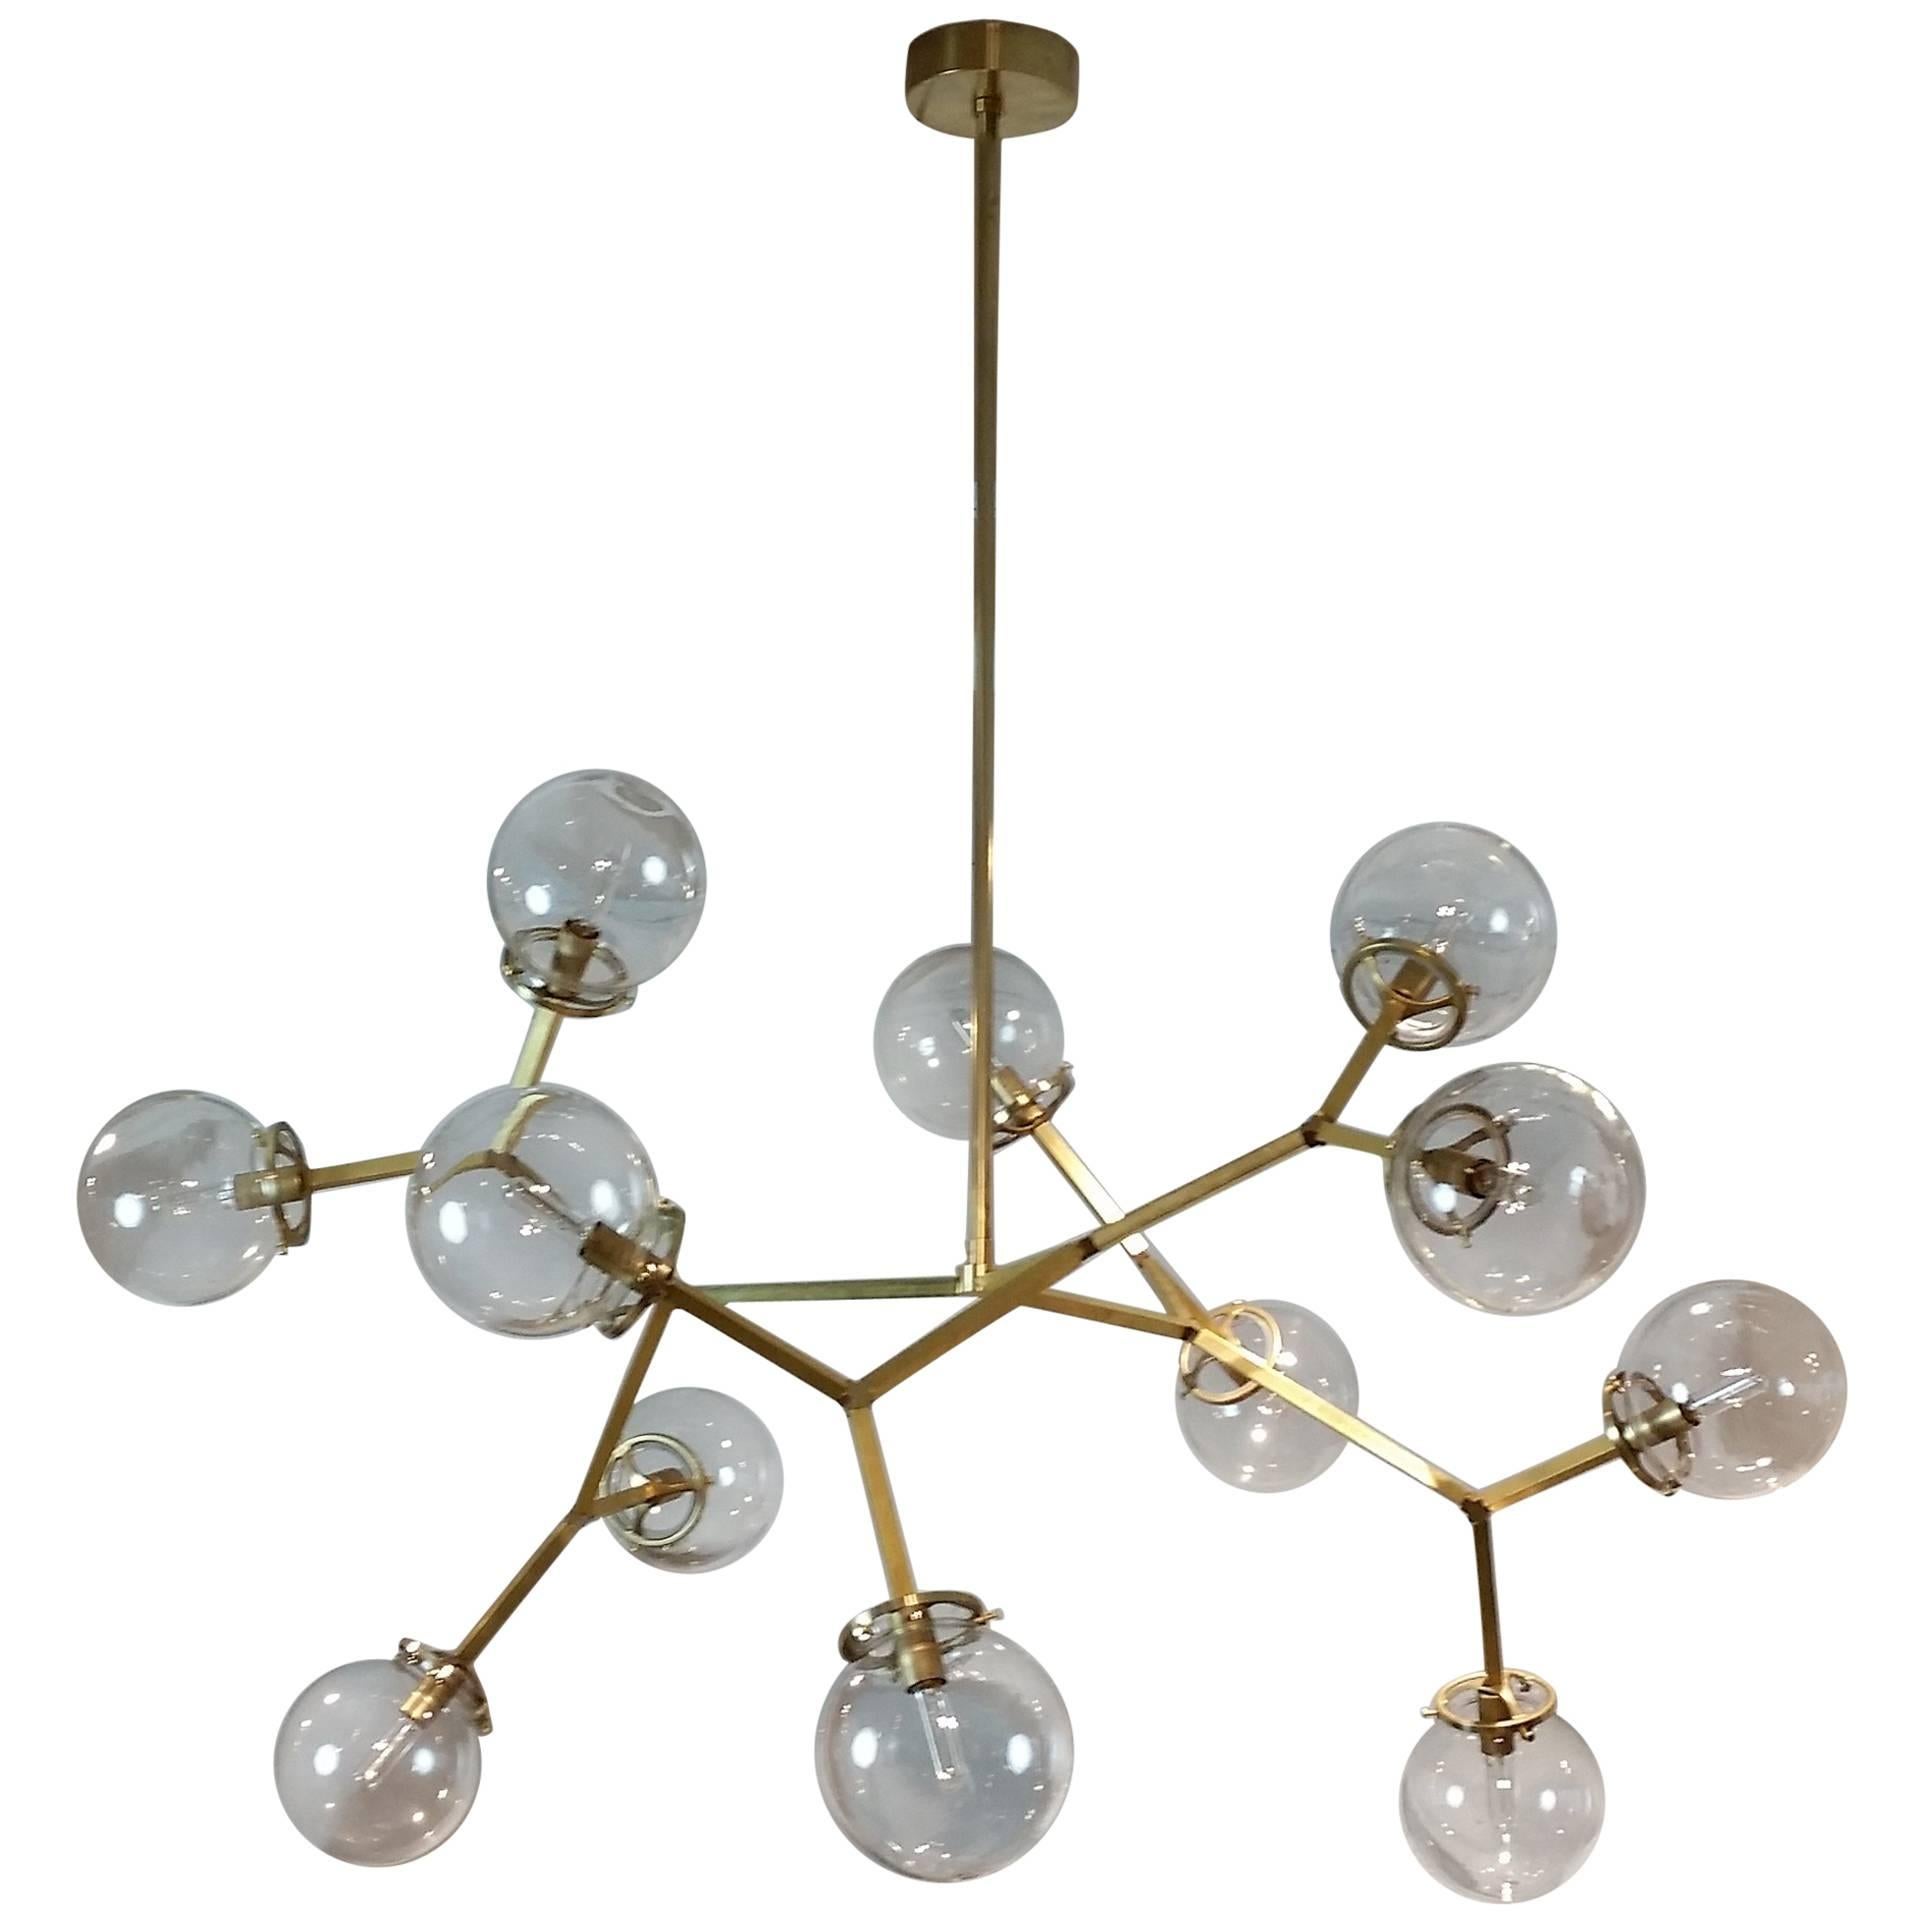 Brass & Glass Model 525 "Macro Molecular" Chandelier by Blueprint Lighting, 2018